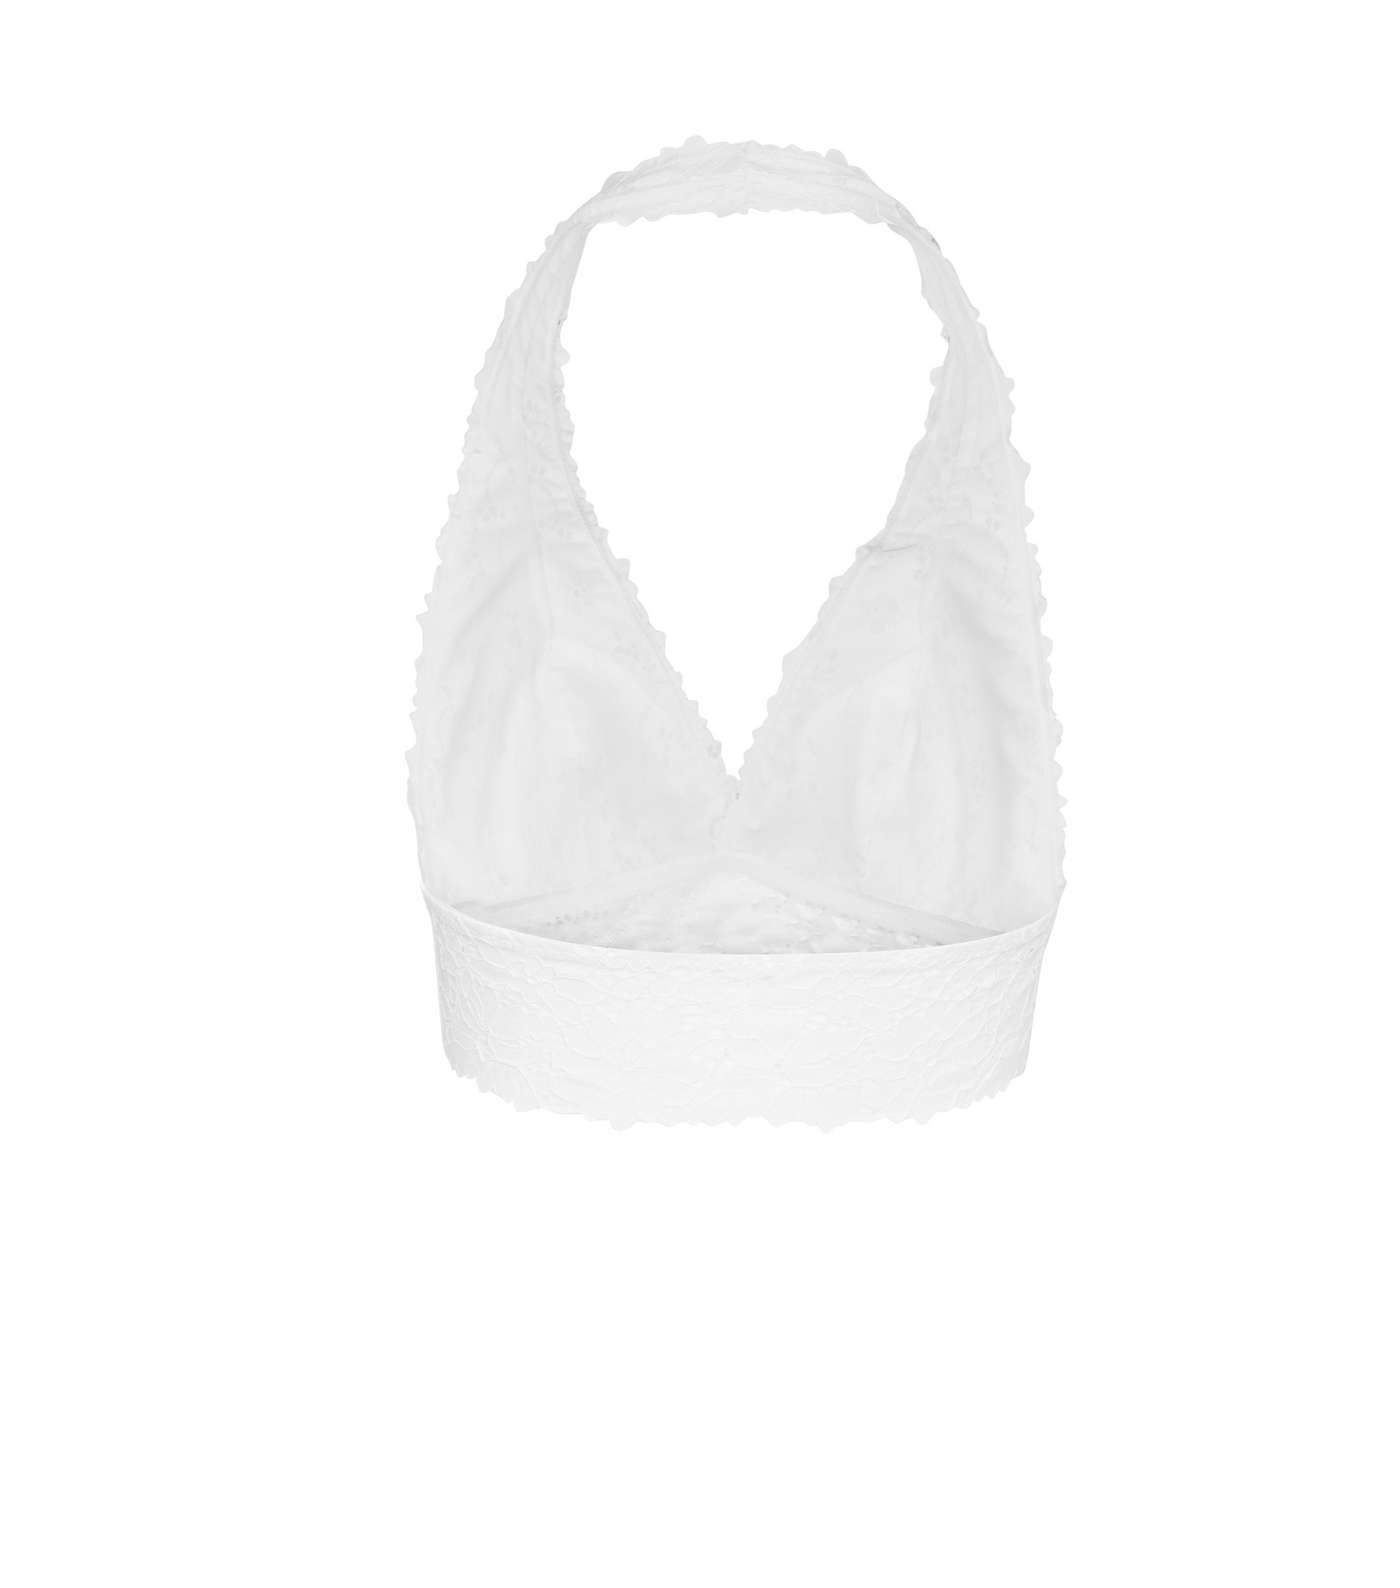 Buy appleLOL Women's Plus Size Vest Floral Halter Lace Bralette Unpadded  Wireless Lingerie Bra Crop Top (White, Large) at